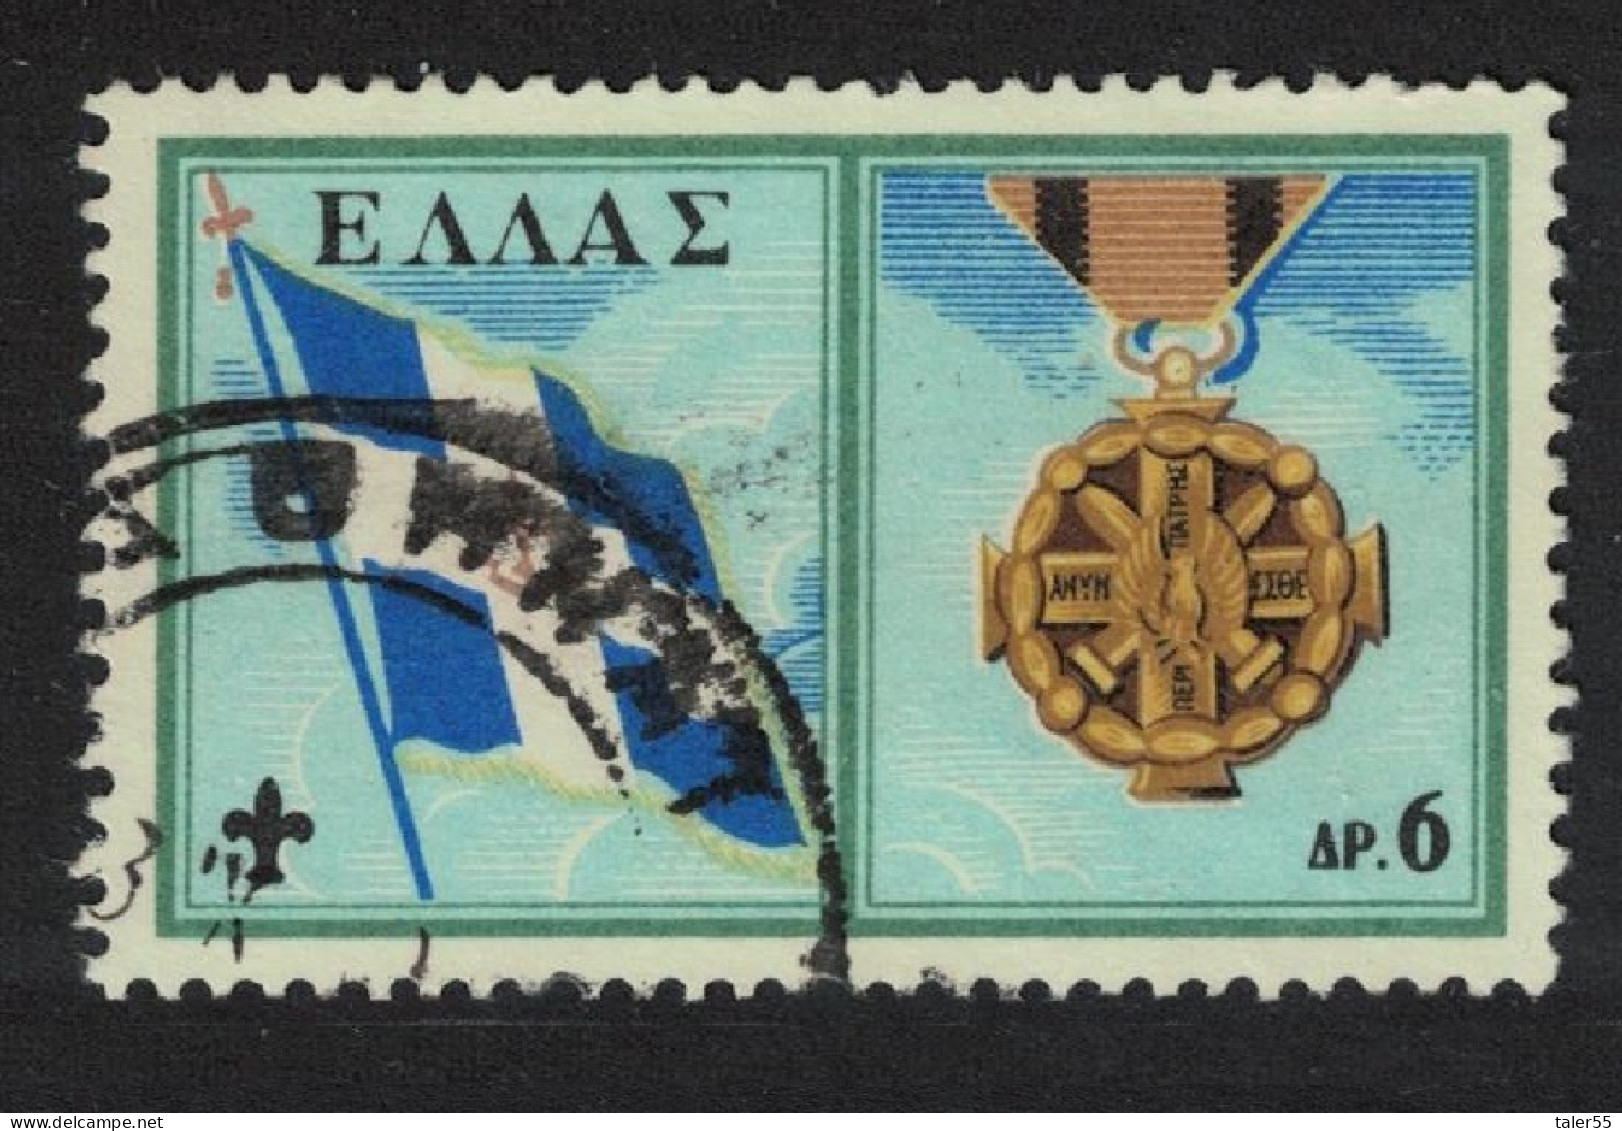 Greece Greek Boy Scout Movement 6Dr KEY VALUE 1960 Canc SG#836 MI#733 - Usati